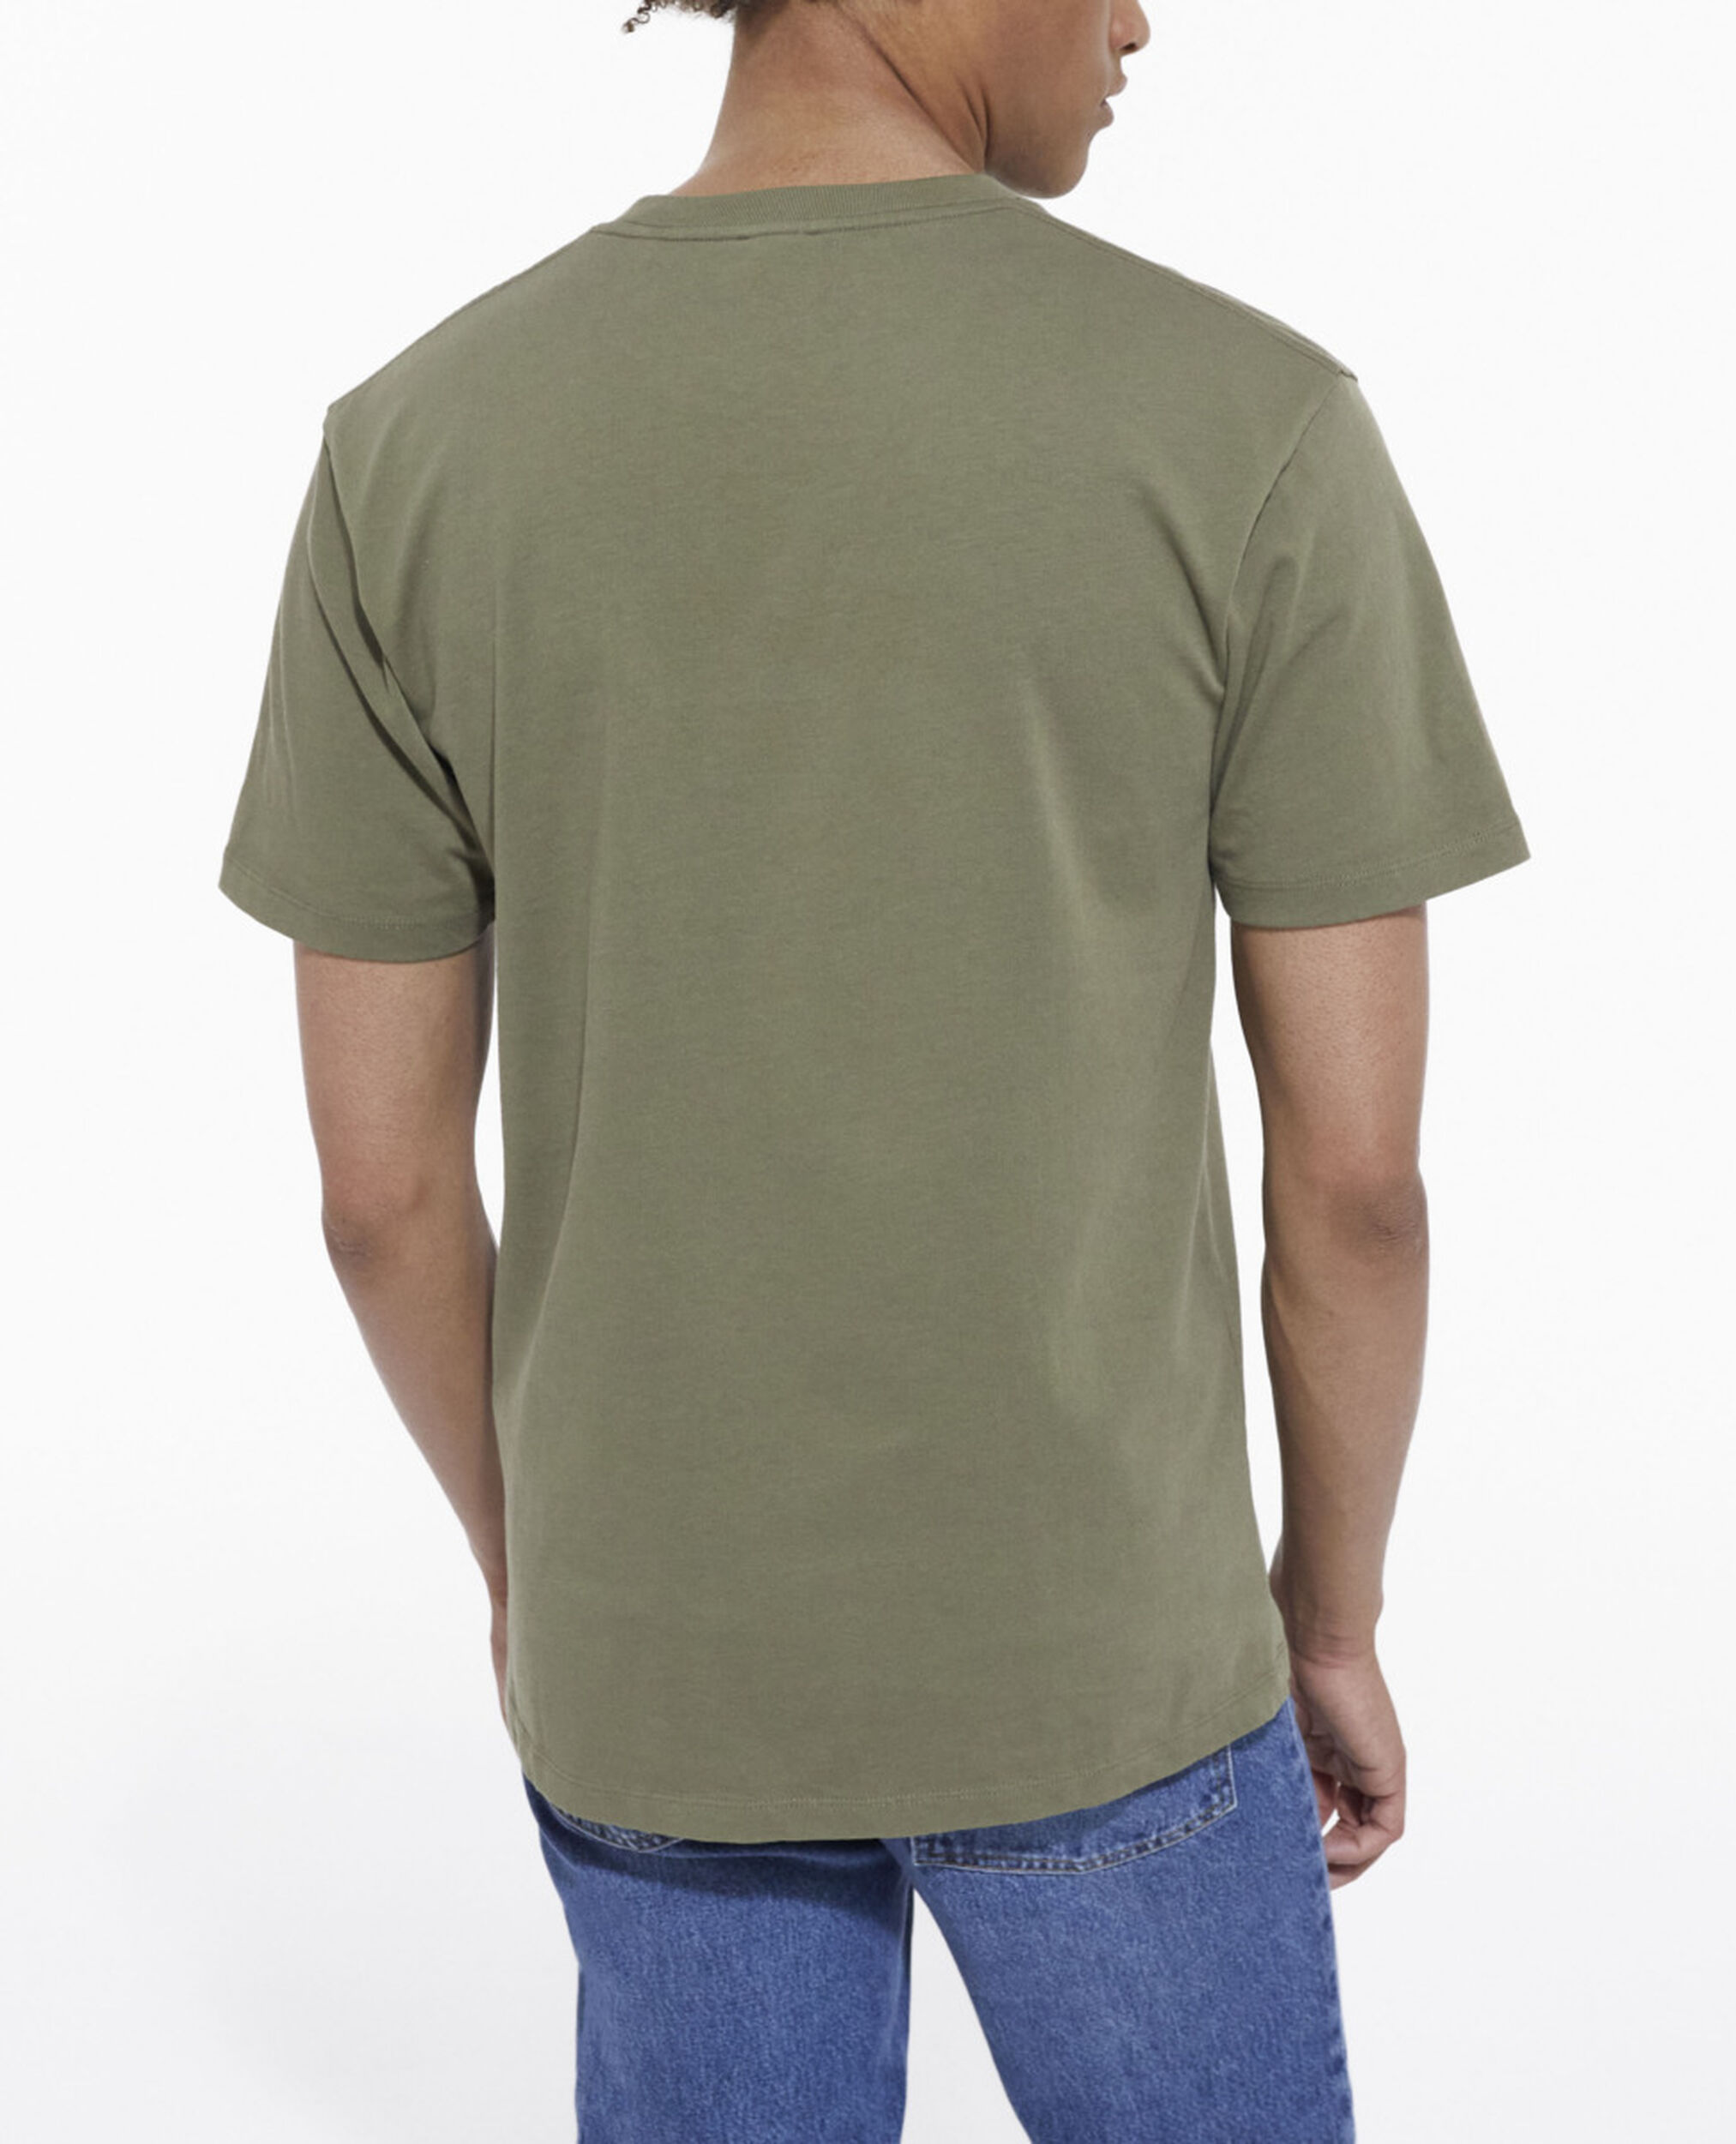 Khaki T-shirt, OLIVE NIGHT, hi-res image number null